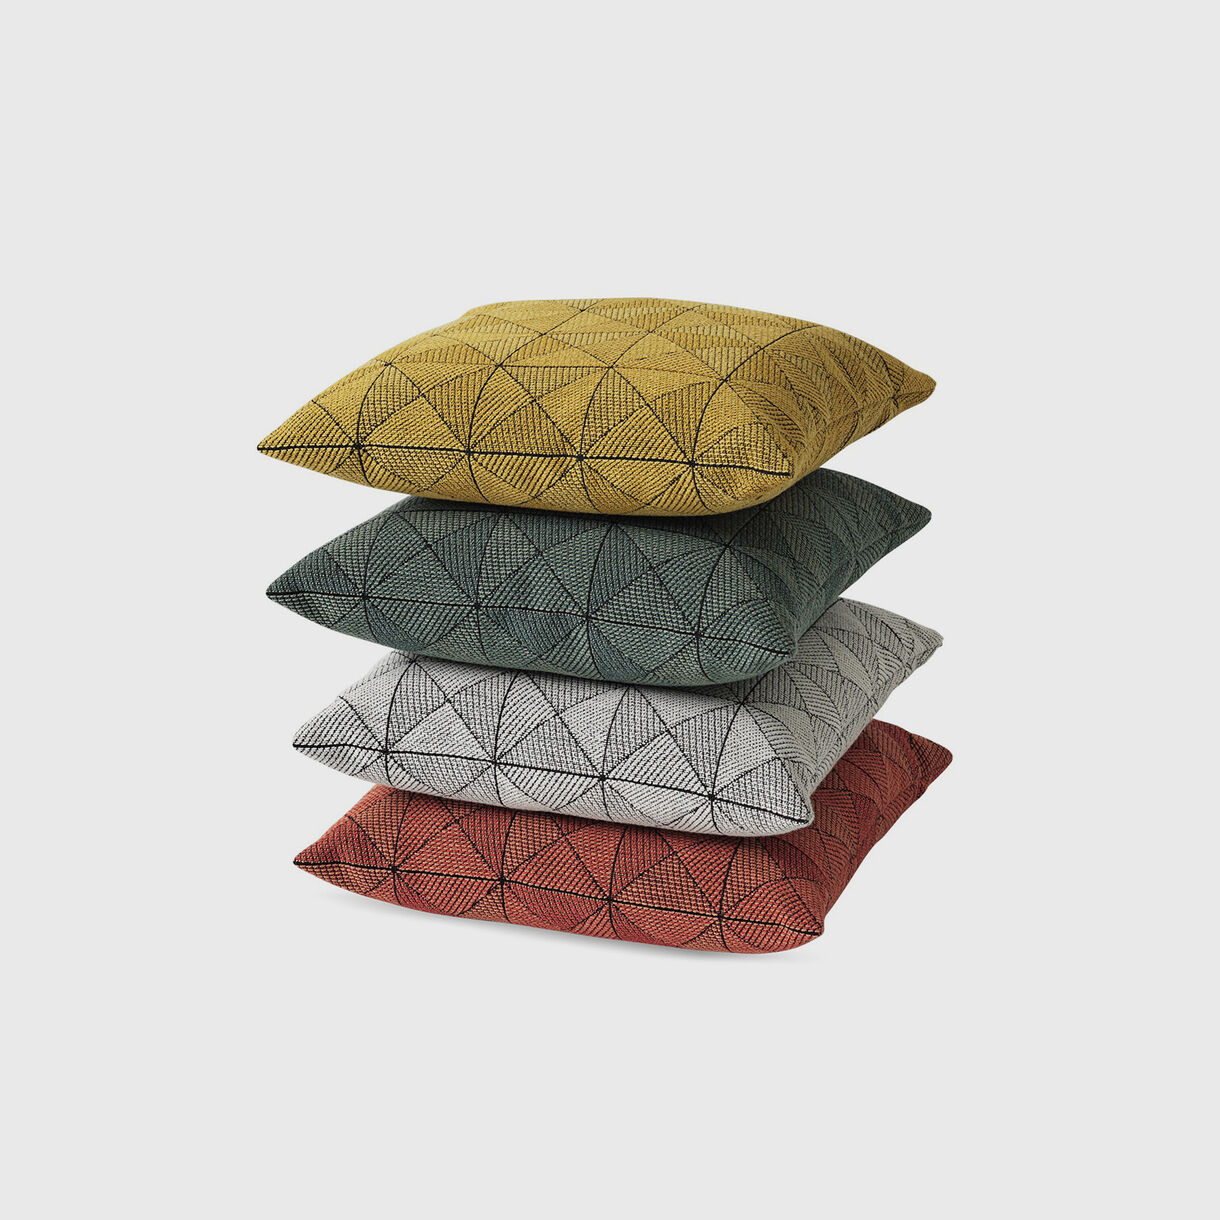 Tile Cushions, Group